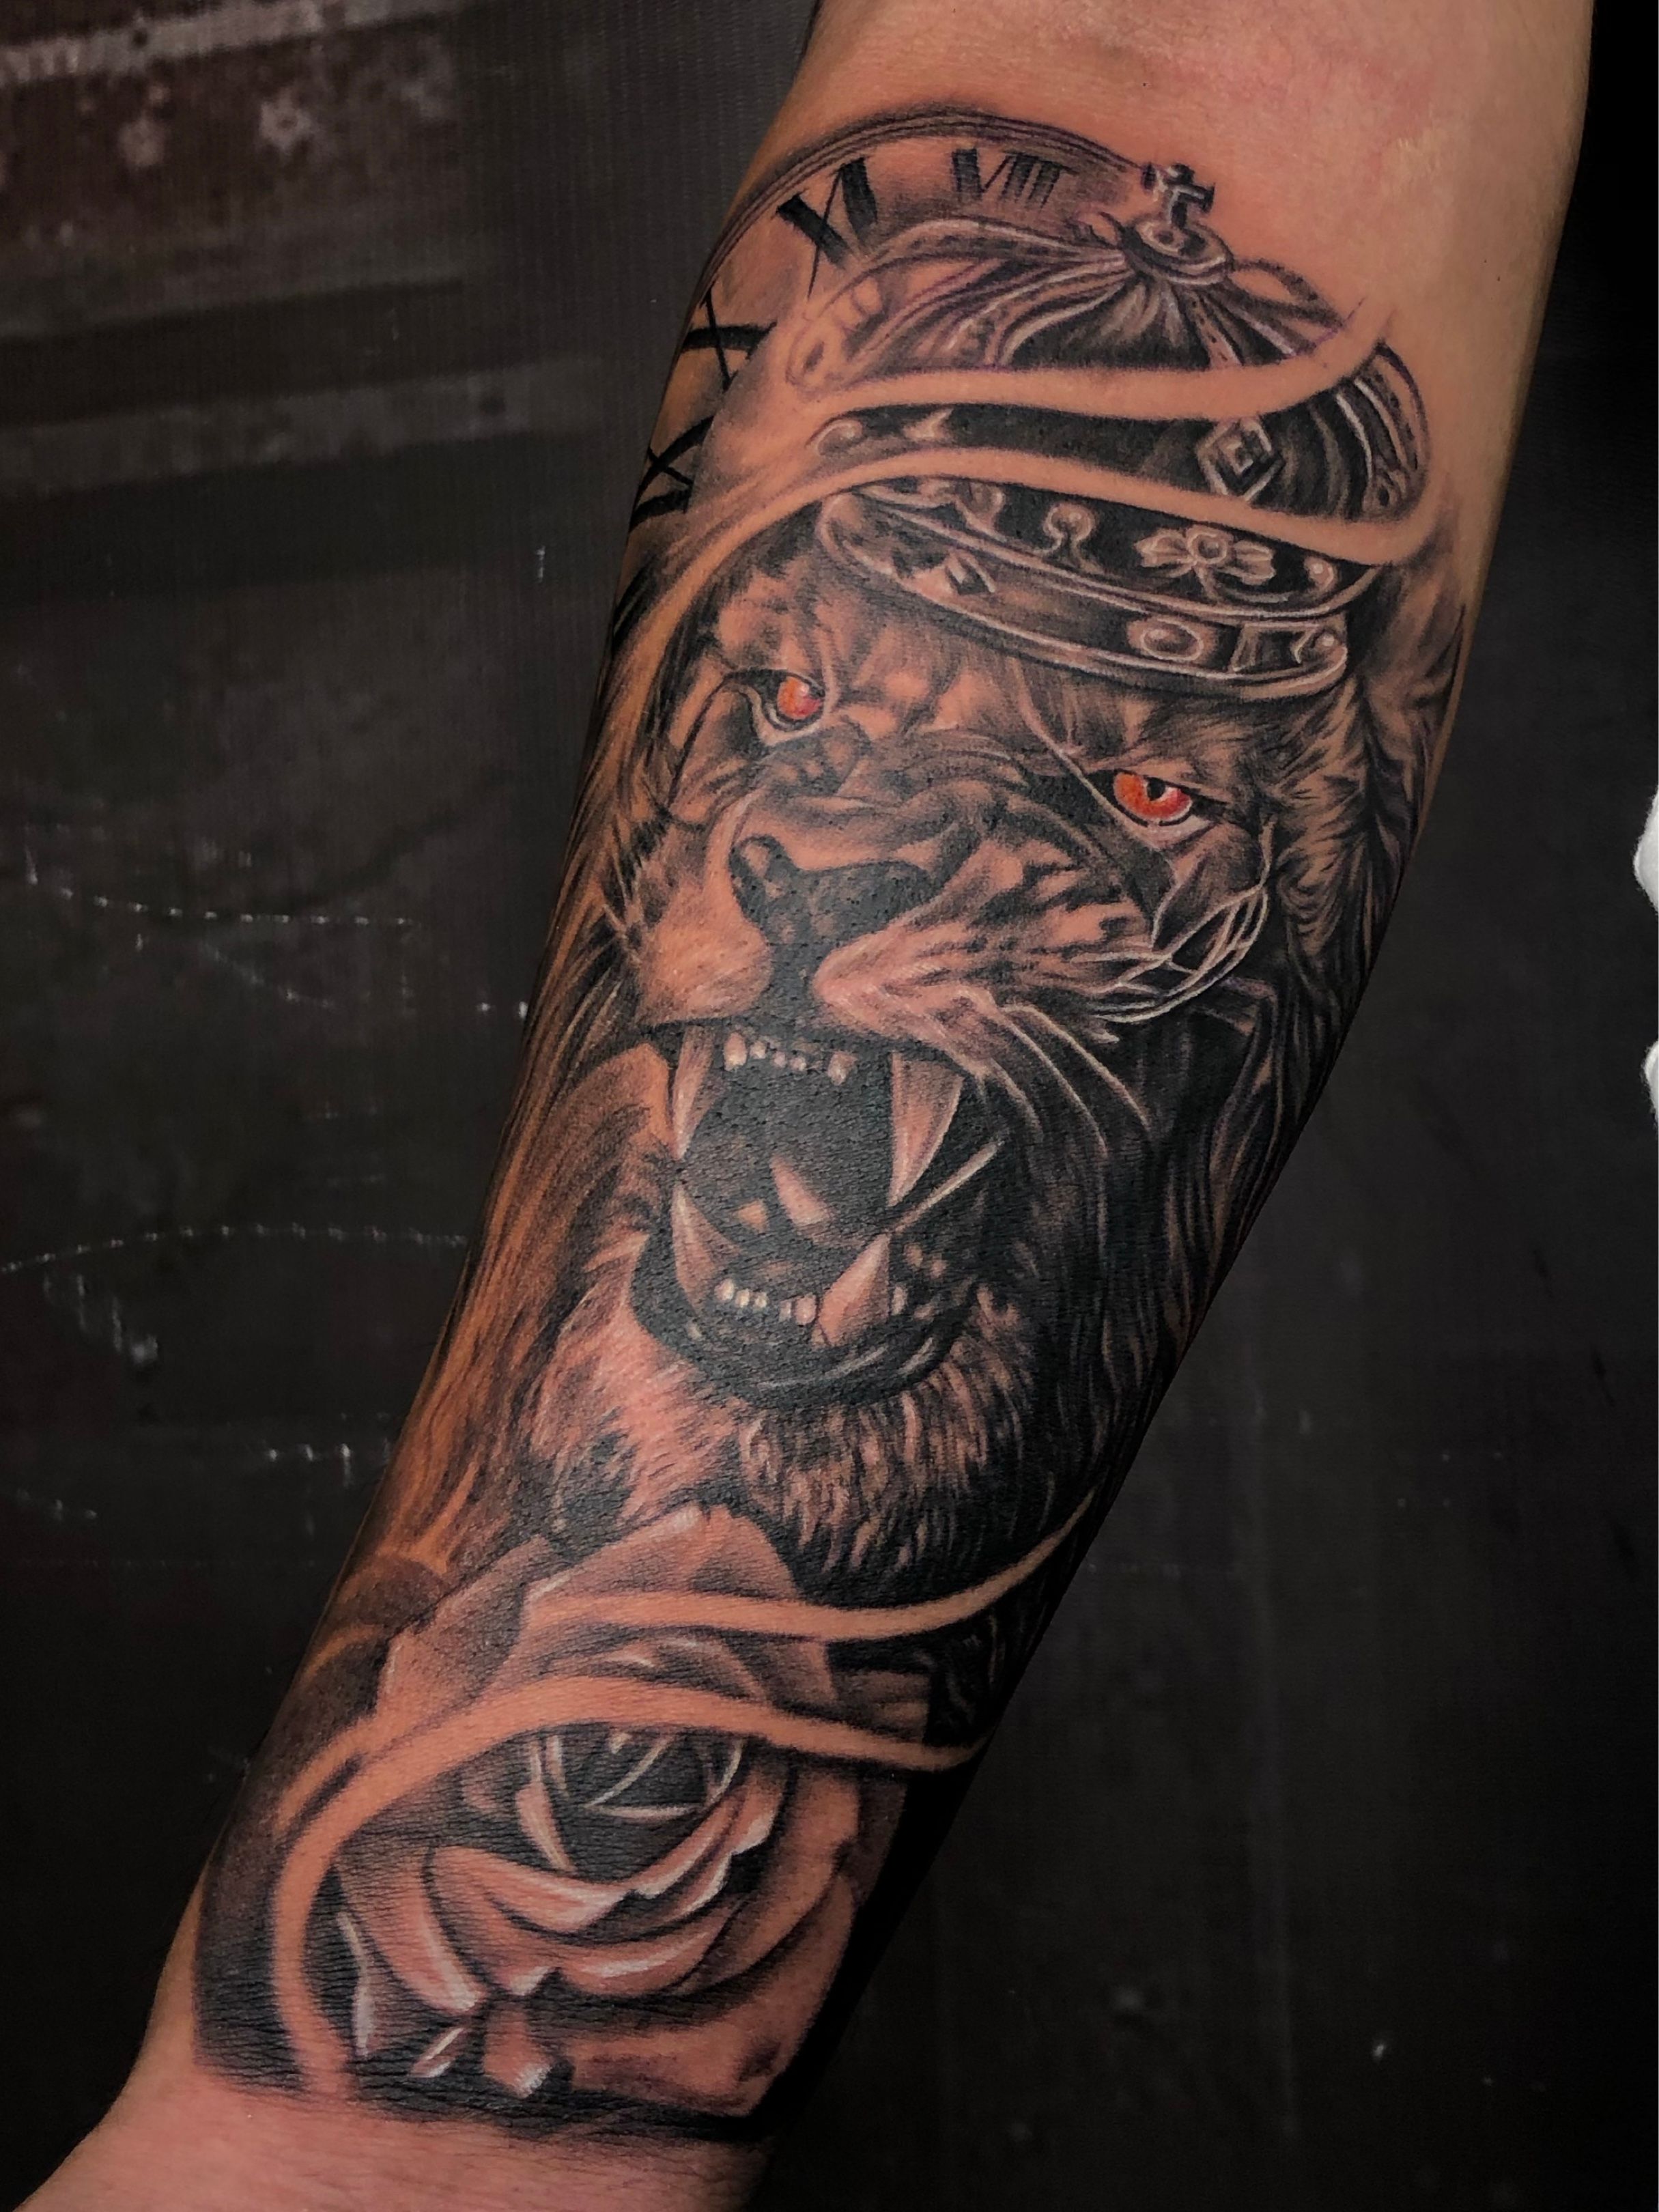 Em Morris | Amazing artist Barna Tattoo @barna_tattoo awesome lion crown  rose arm tattoo! @inkedmag @worldofartists @gq @liontattoos @ink | Instagram